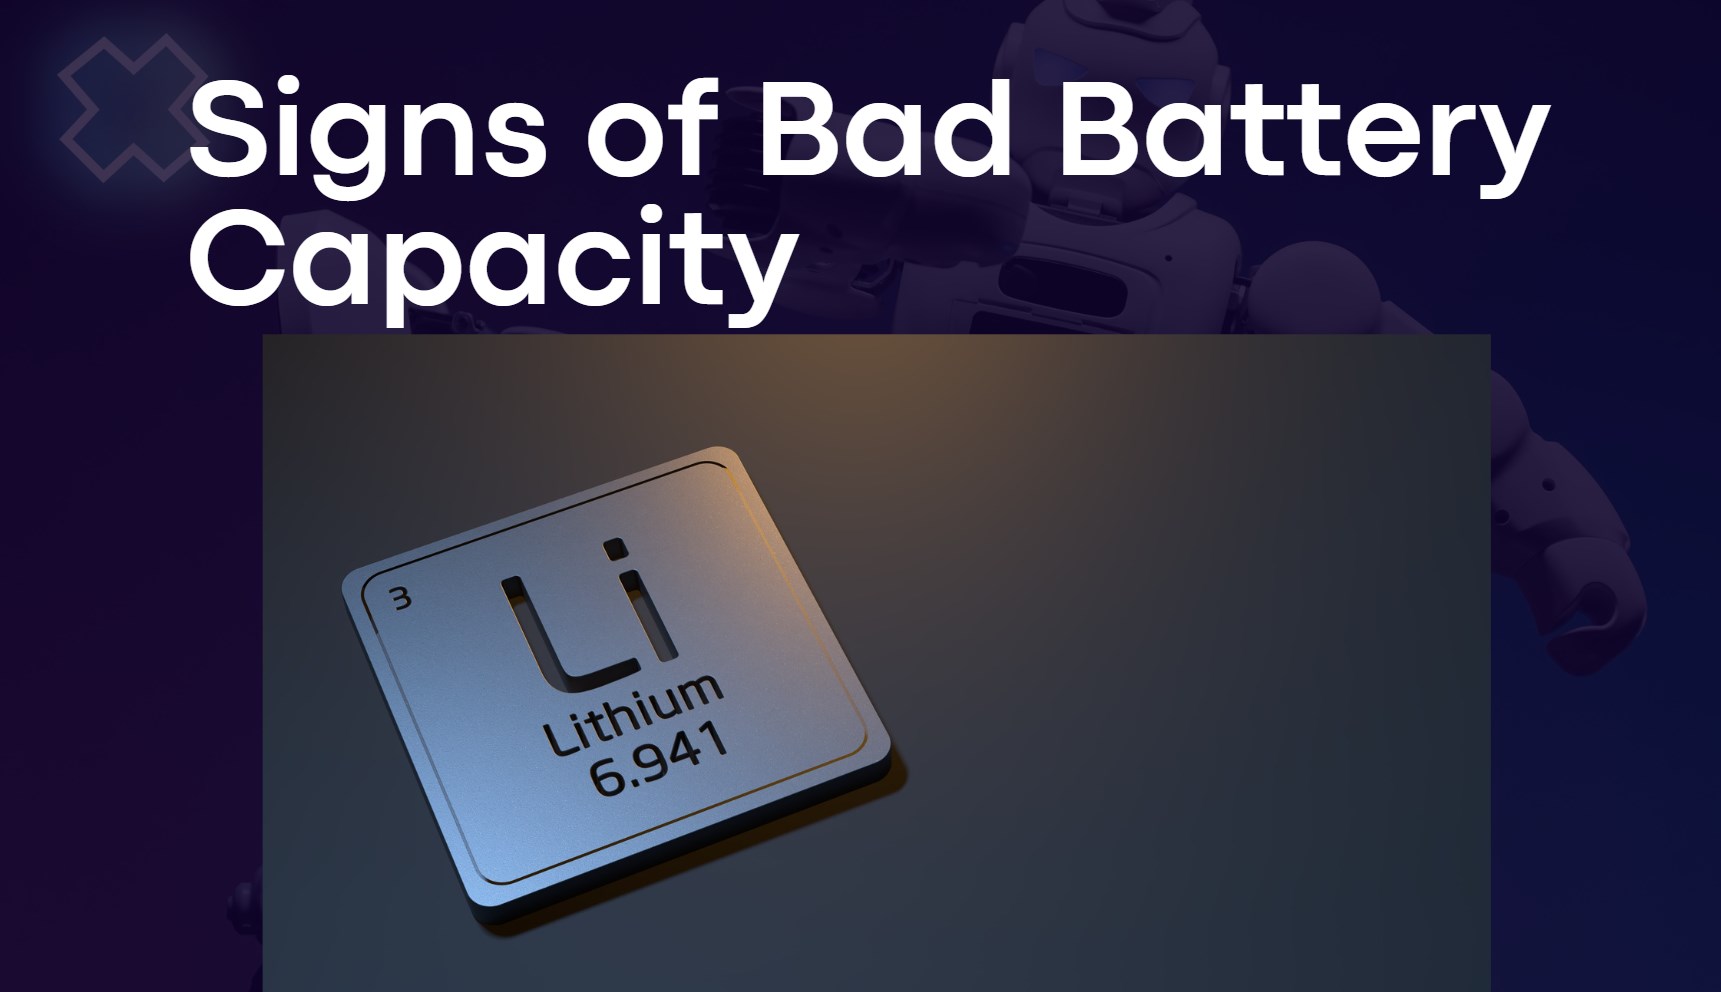 Signs of Bad Battery Capacity